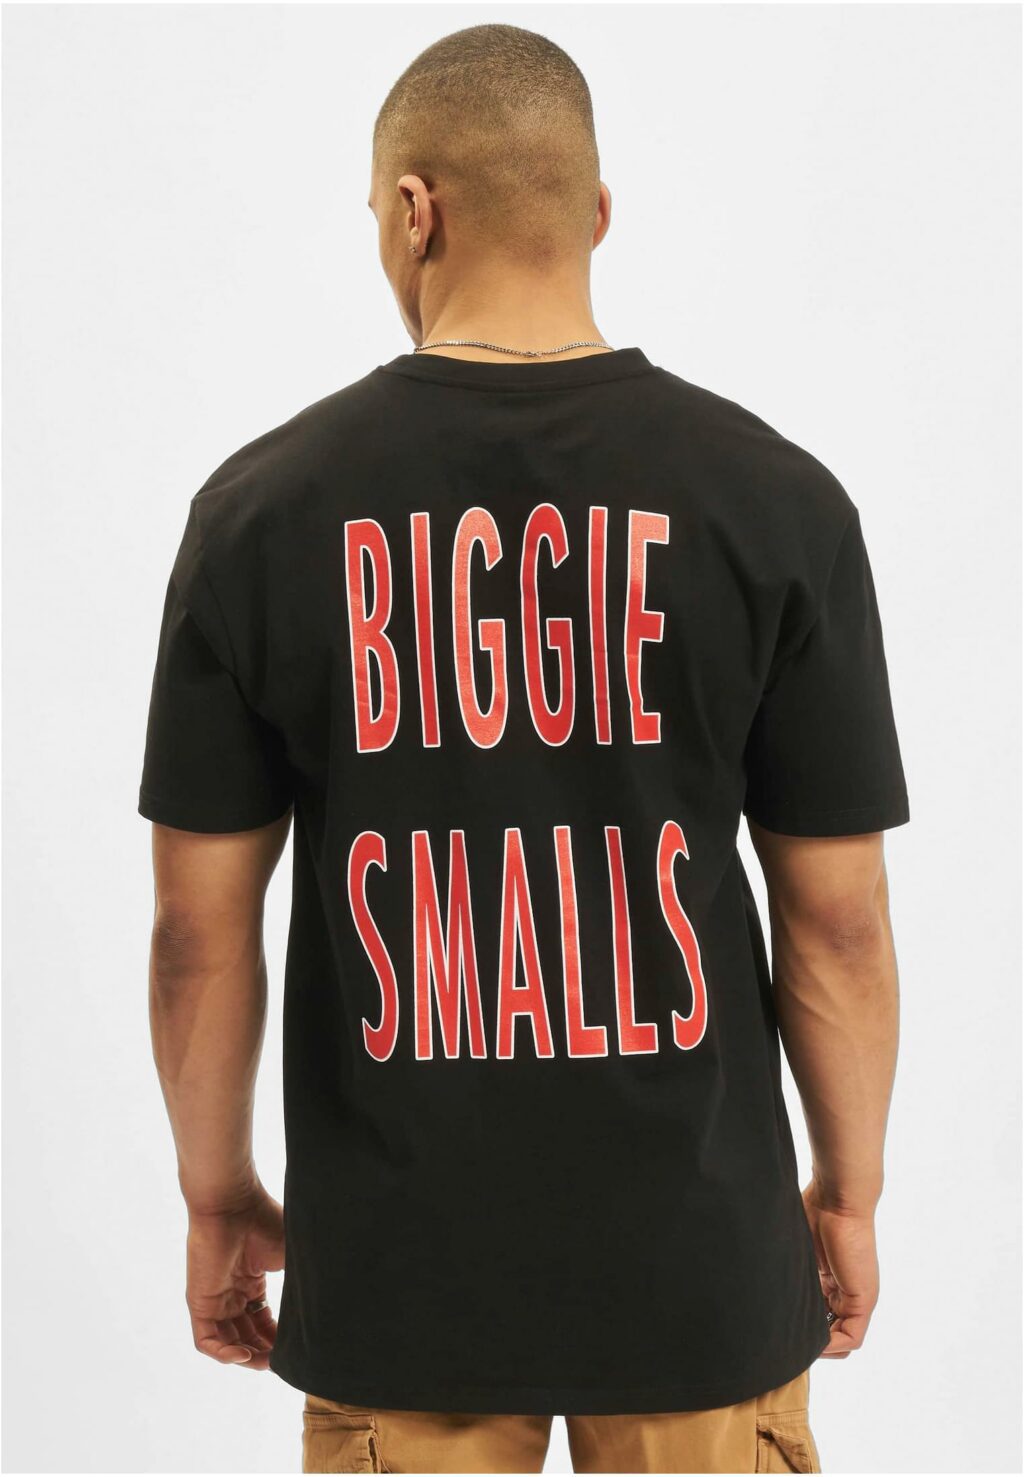 Biggie Smalls Tee black MT1992